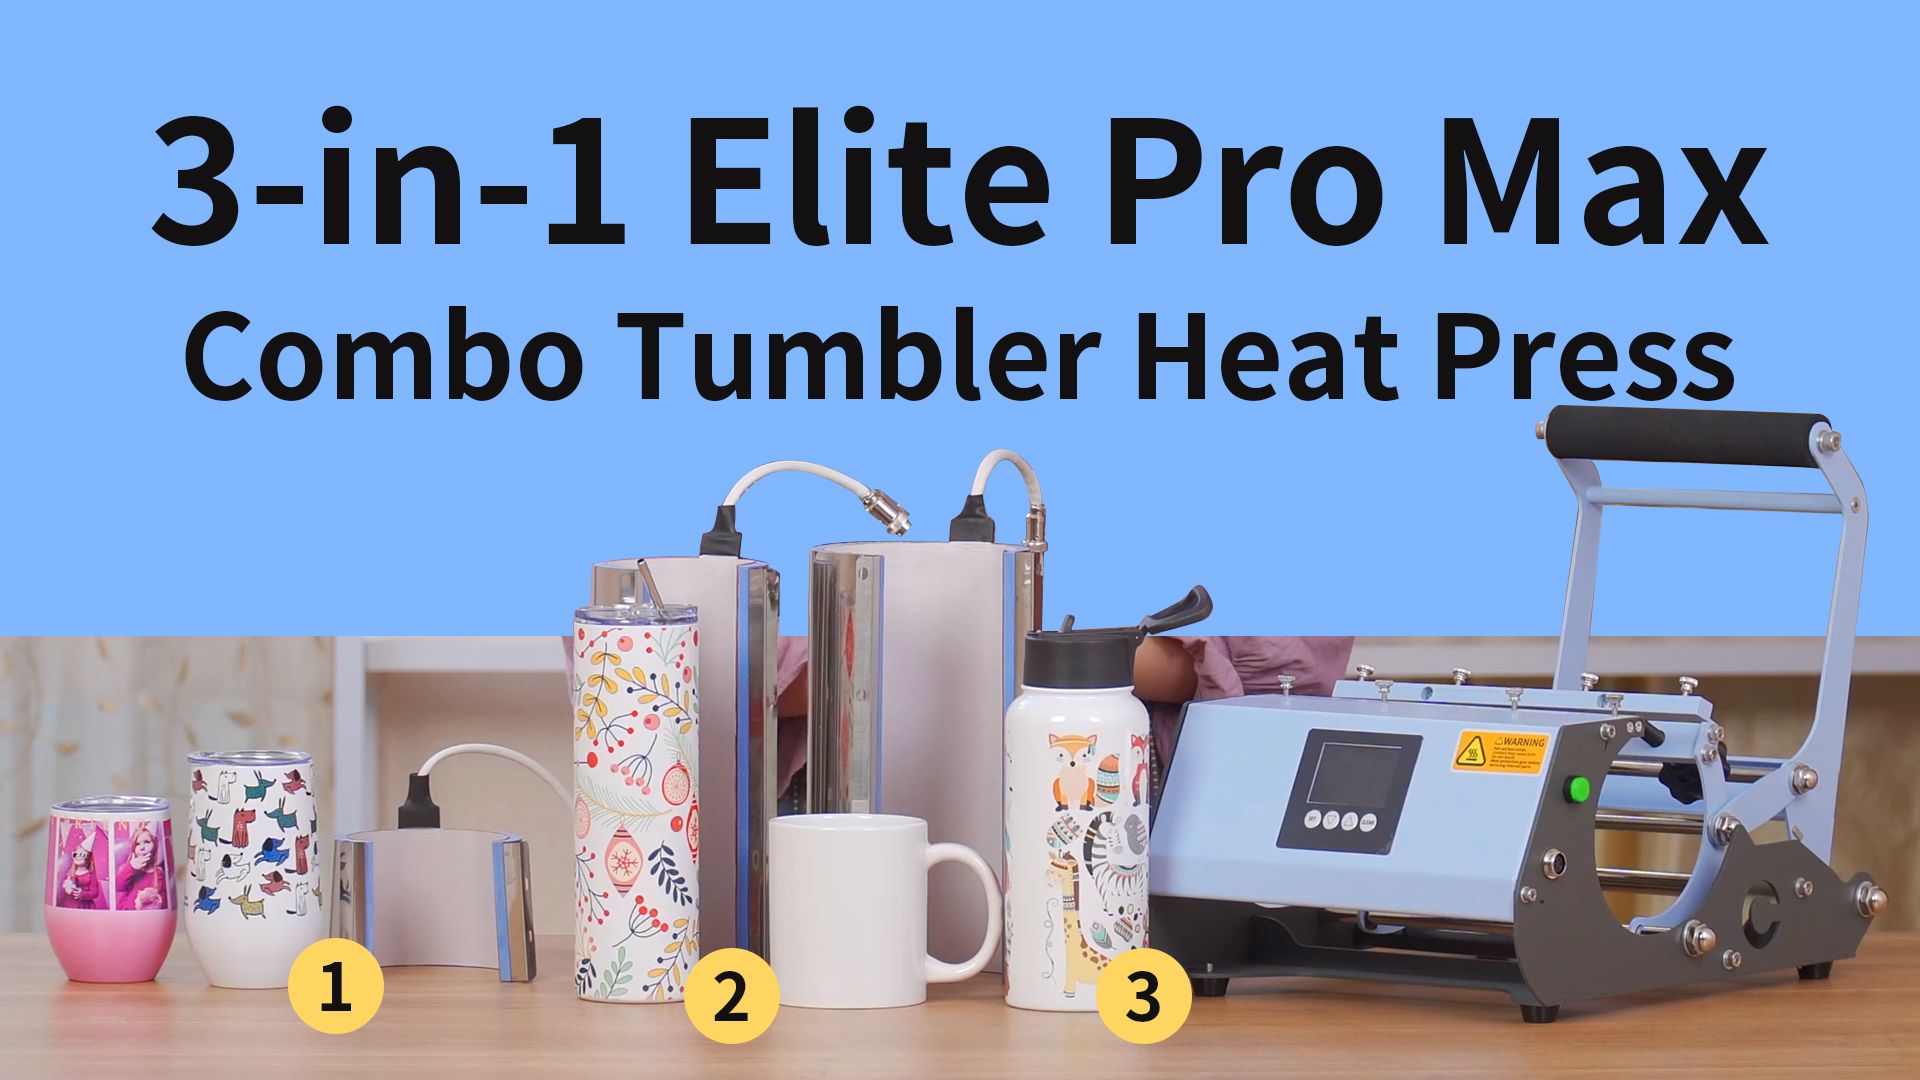 Introduce NEW 3-in-1 Elite Pro Max Tumbler Press